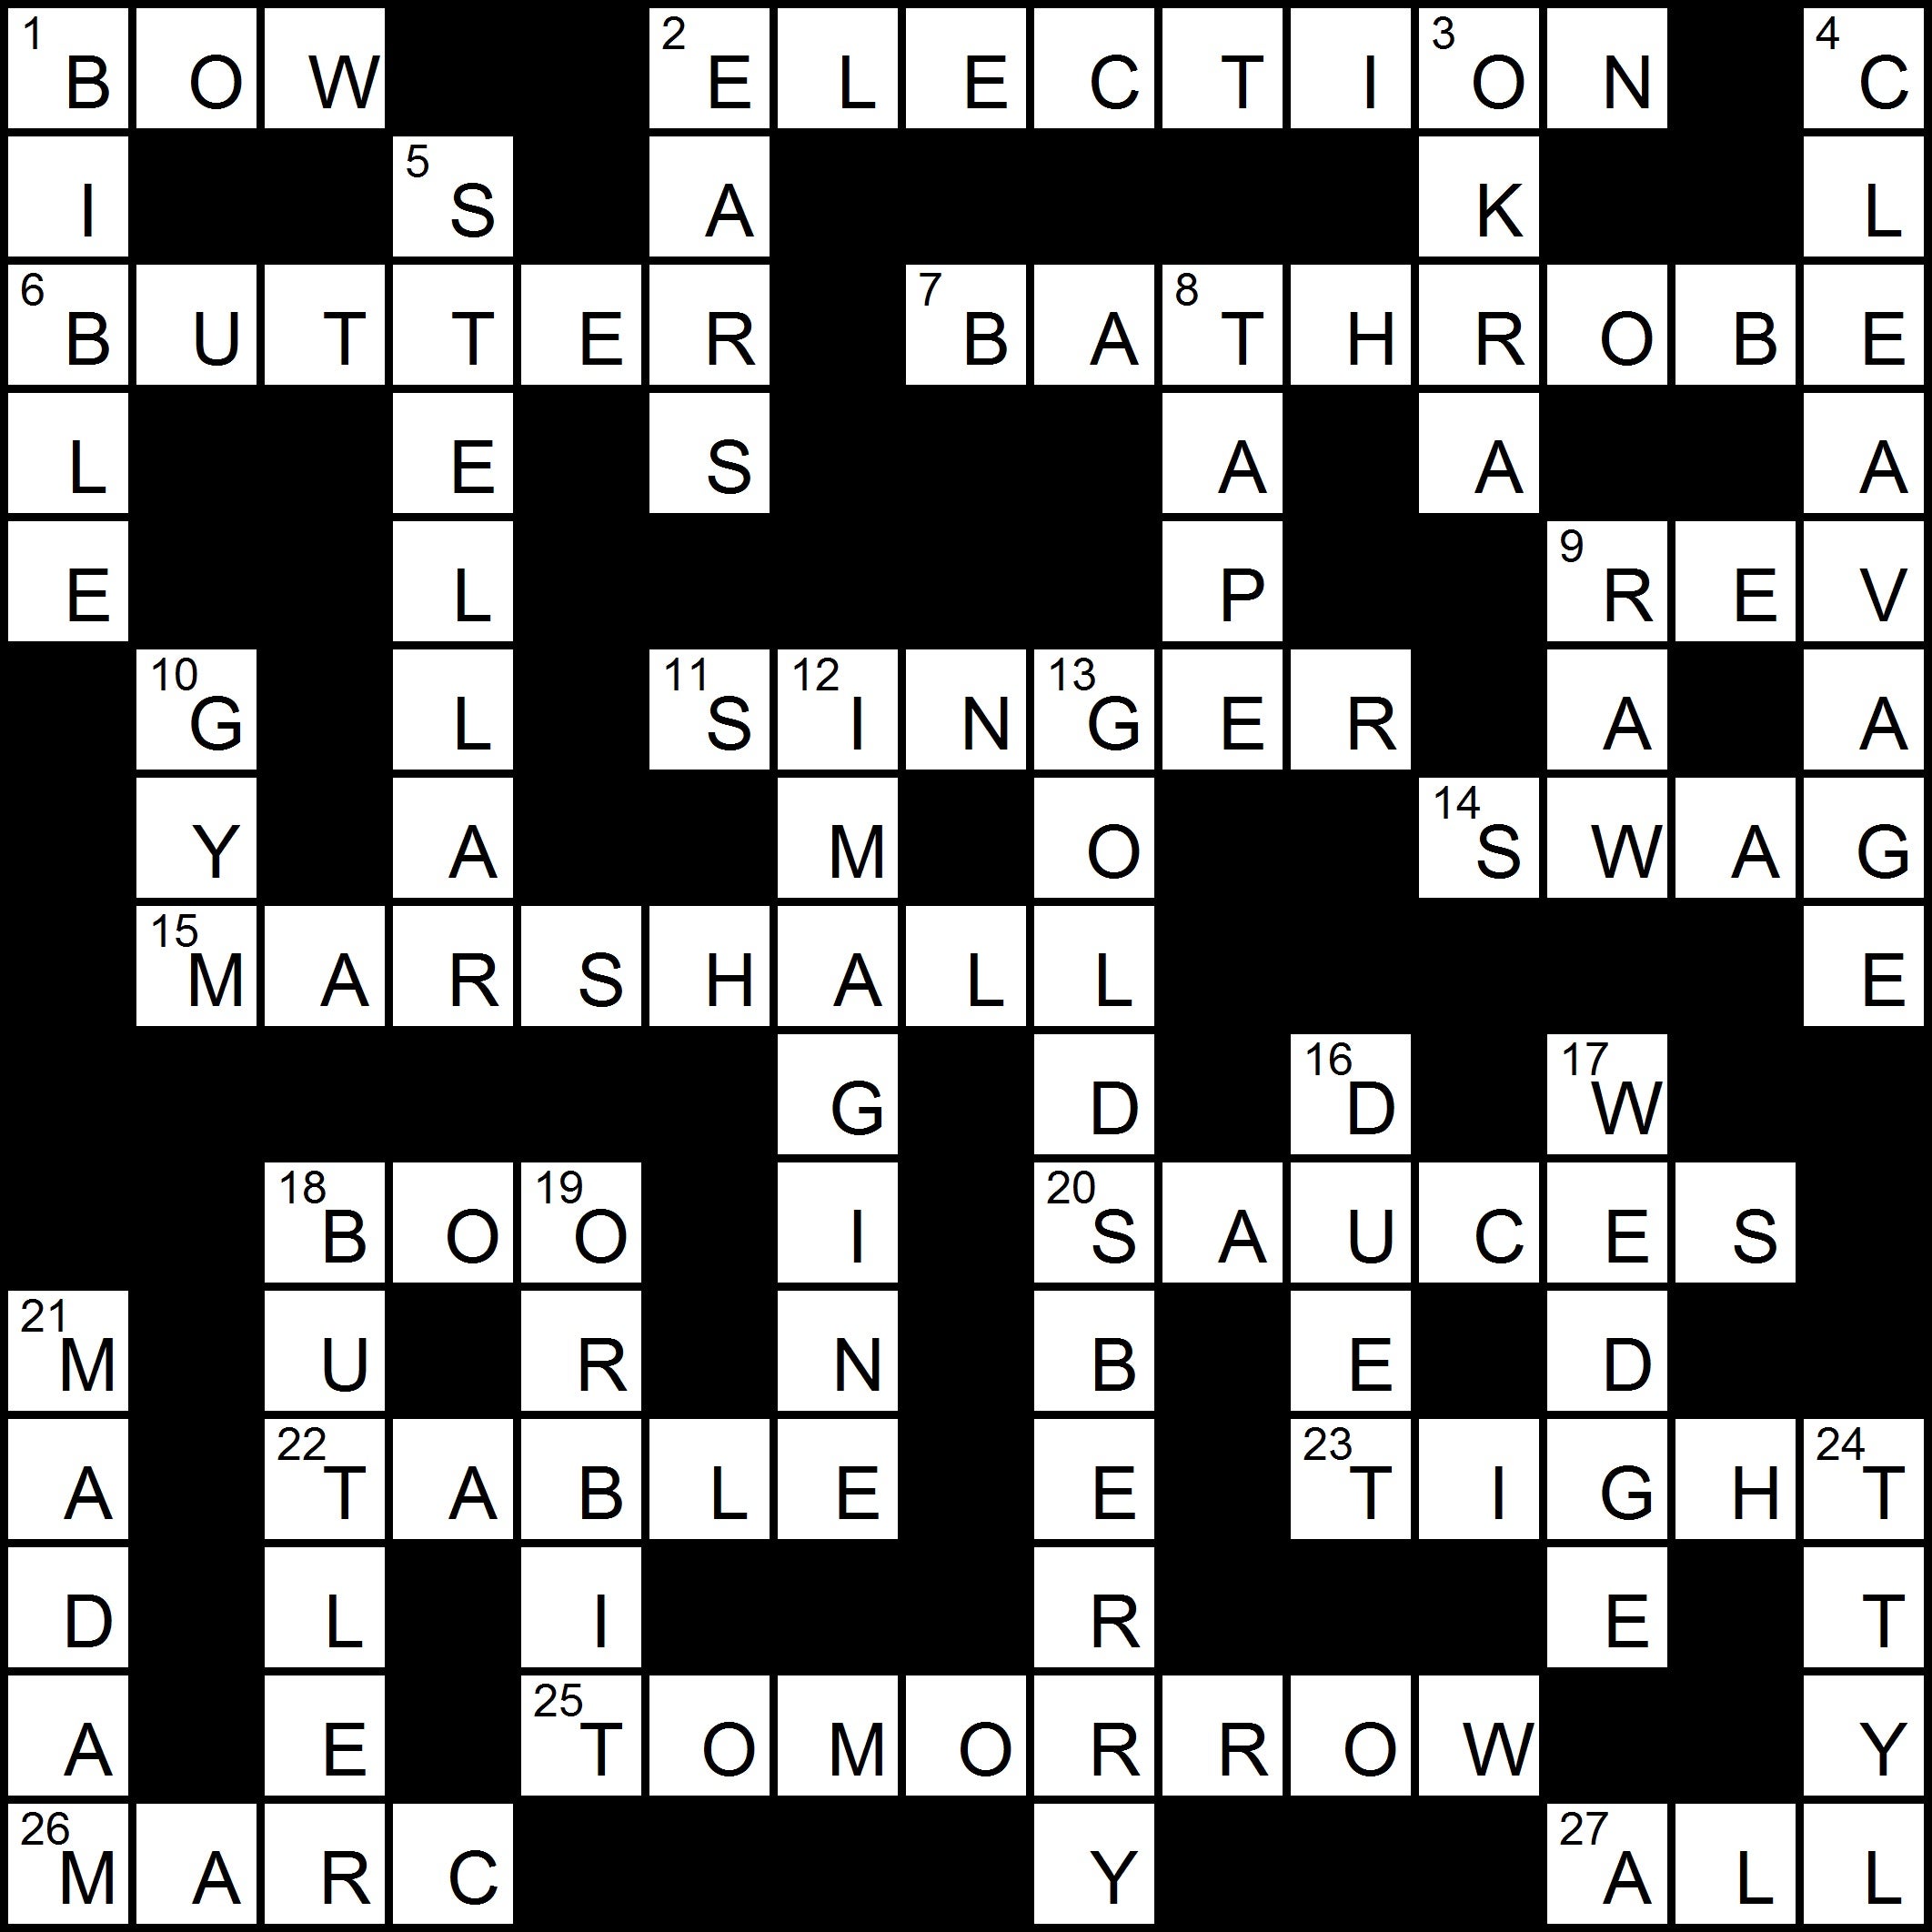 Essence Magazine Crossword Puzzle Answers
